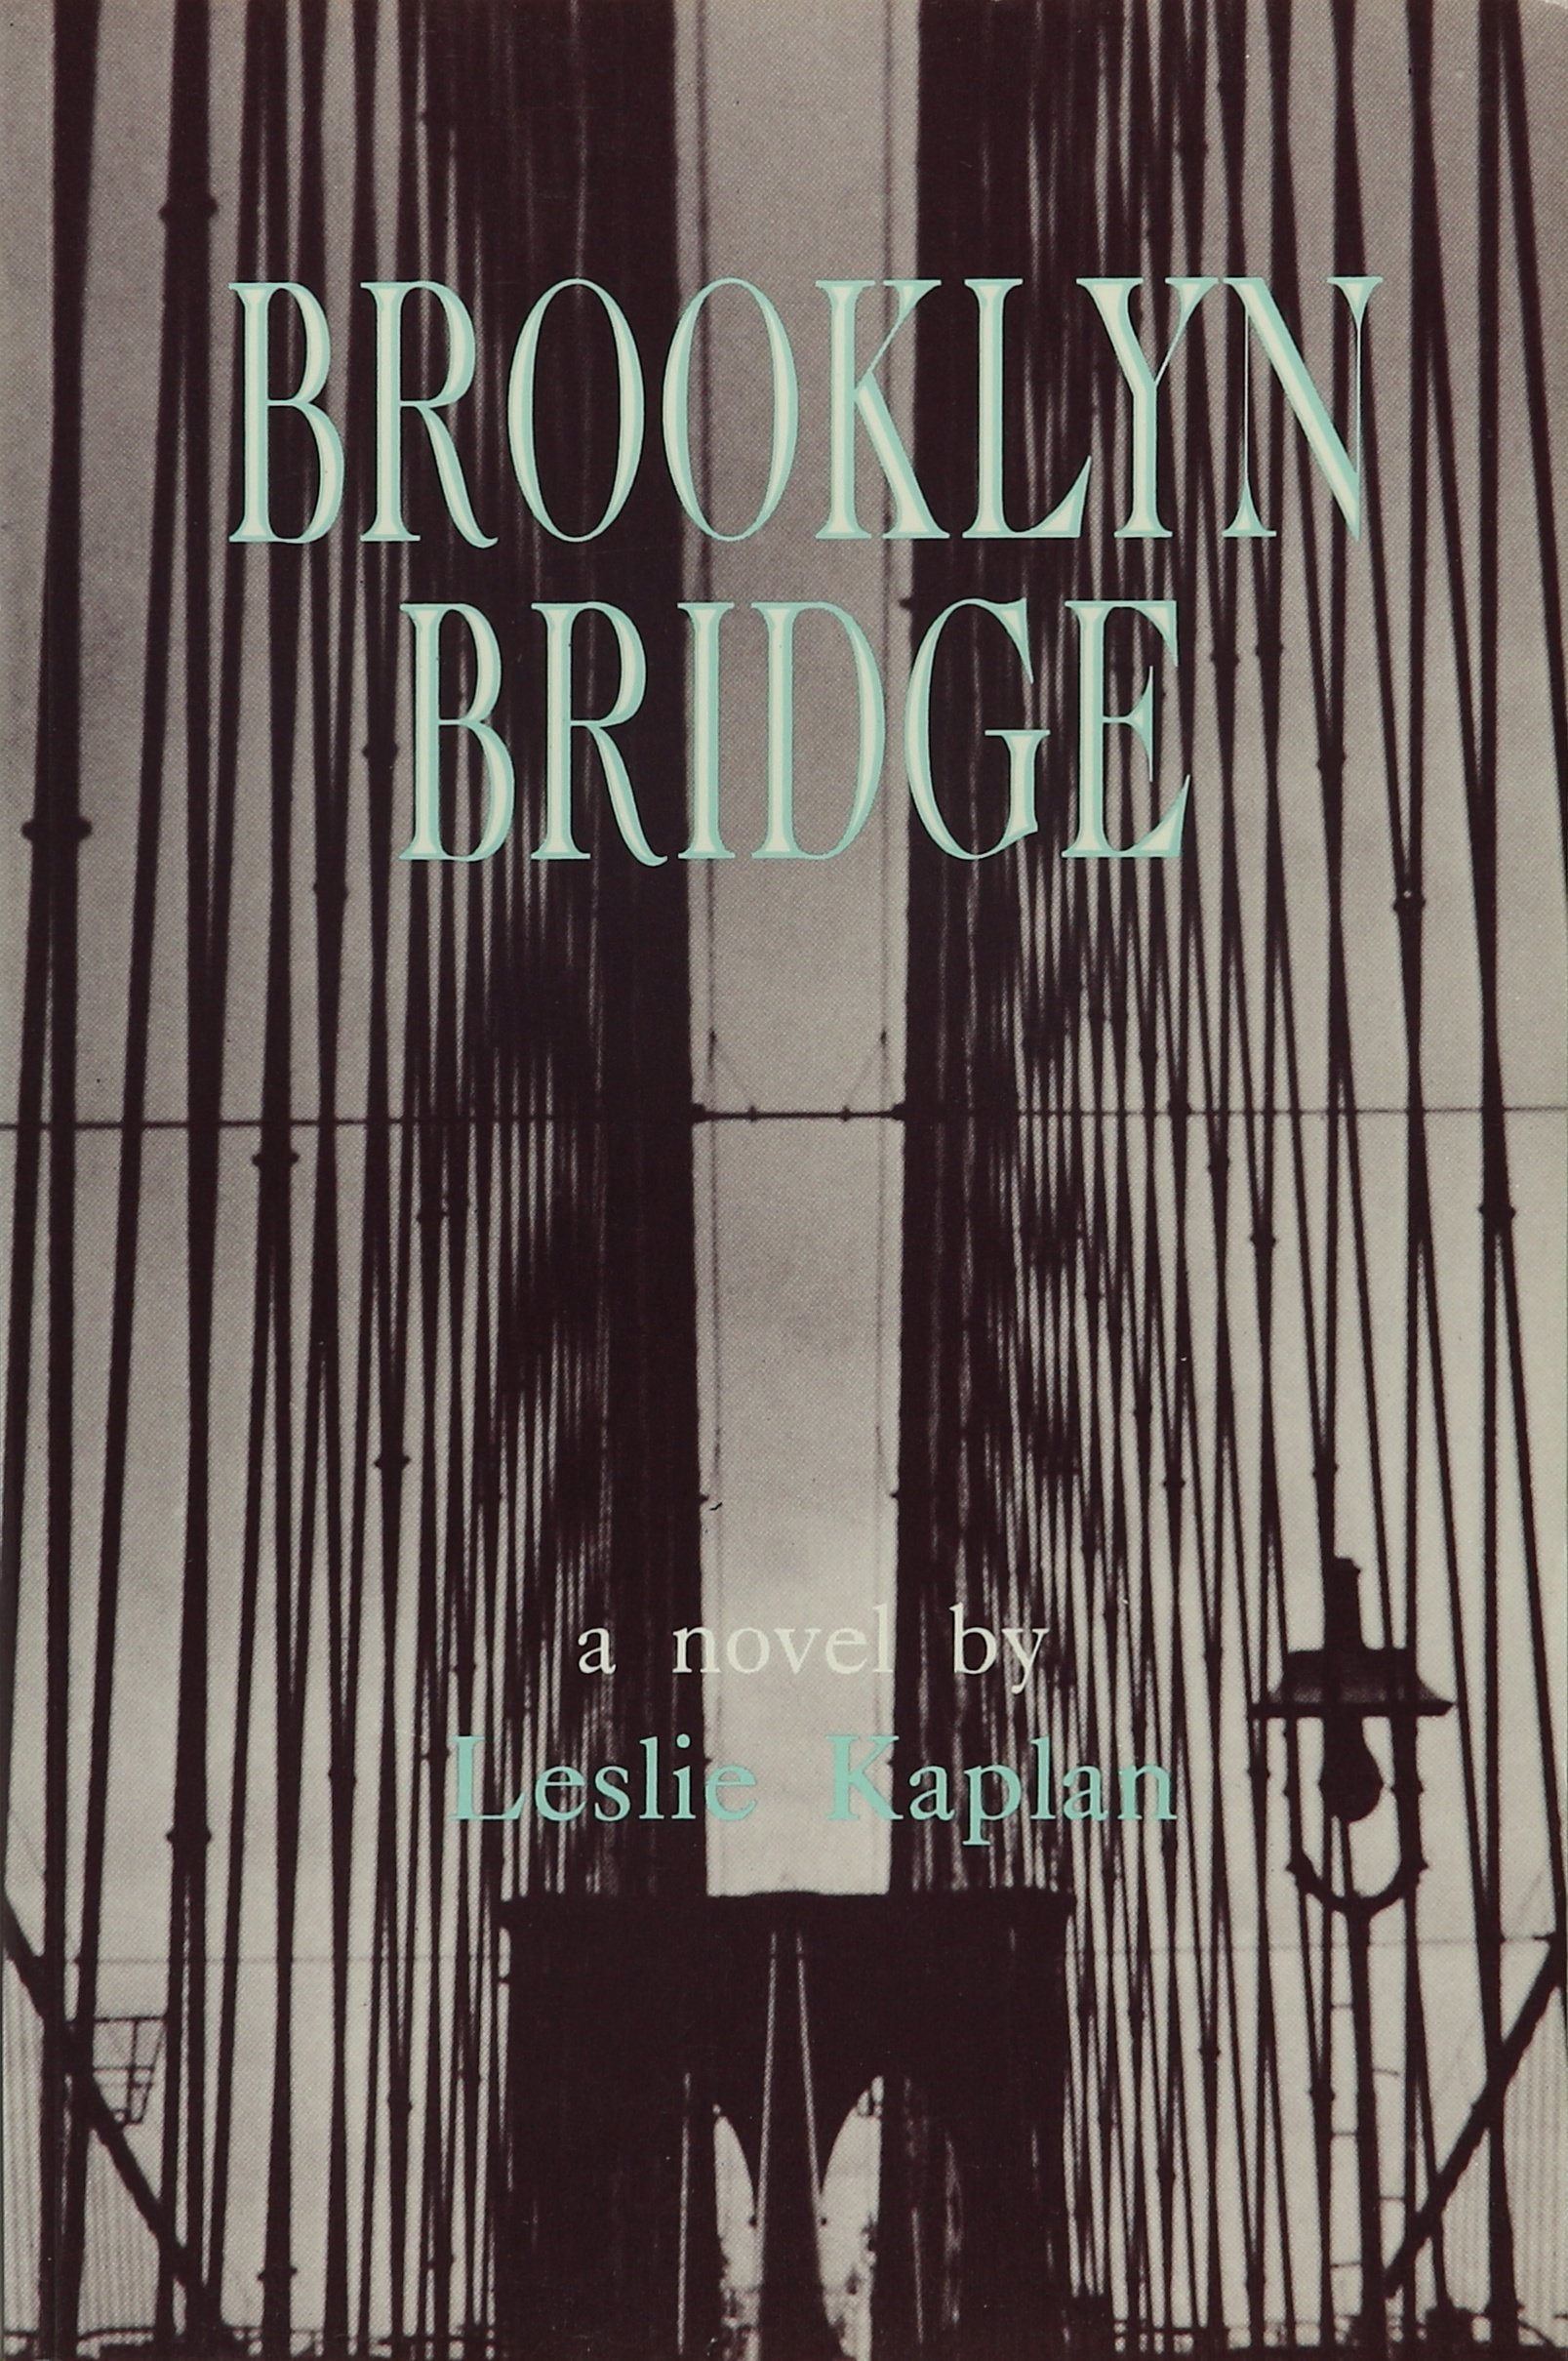 Brooklyn Bridge magazine reviews